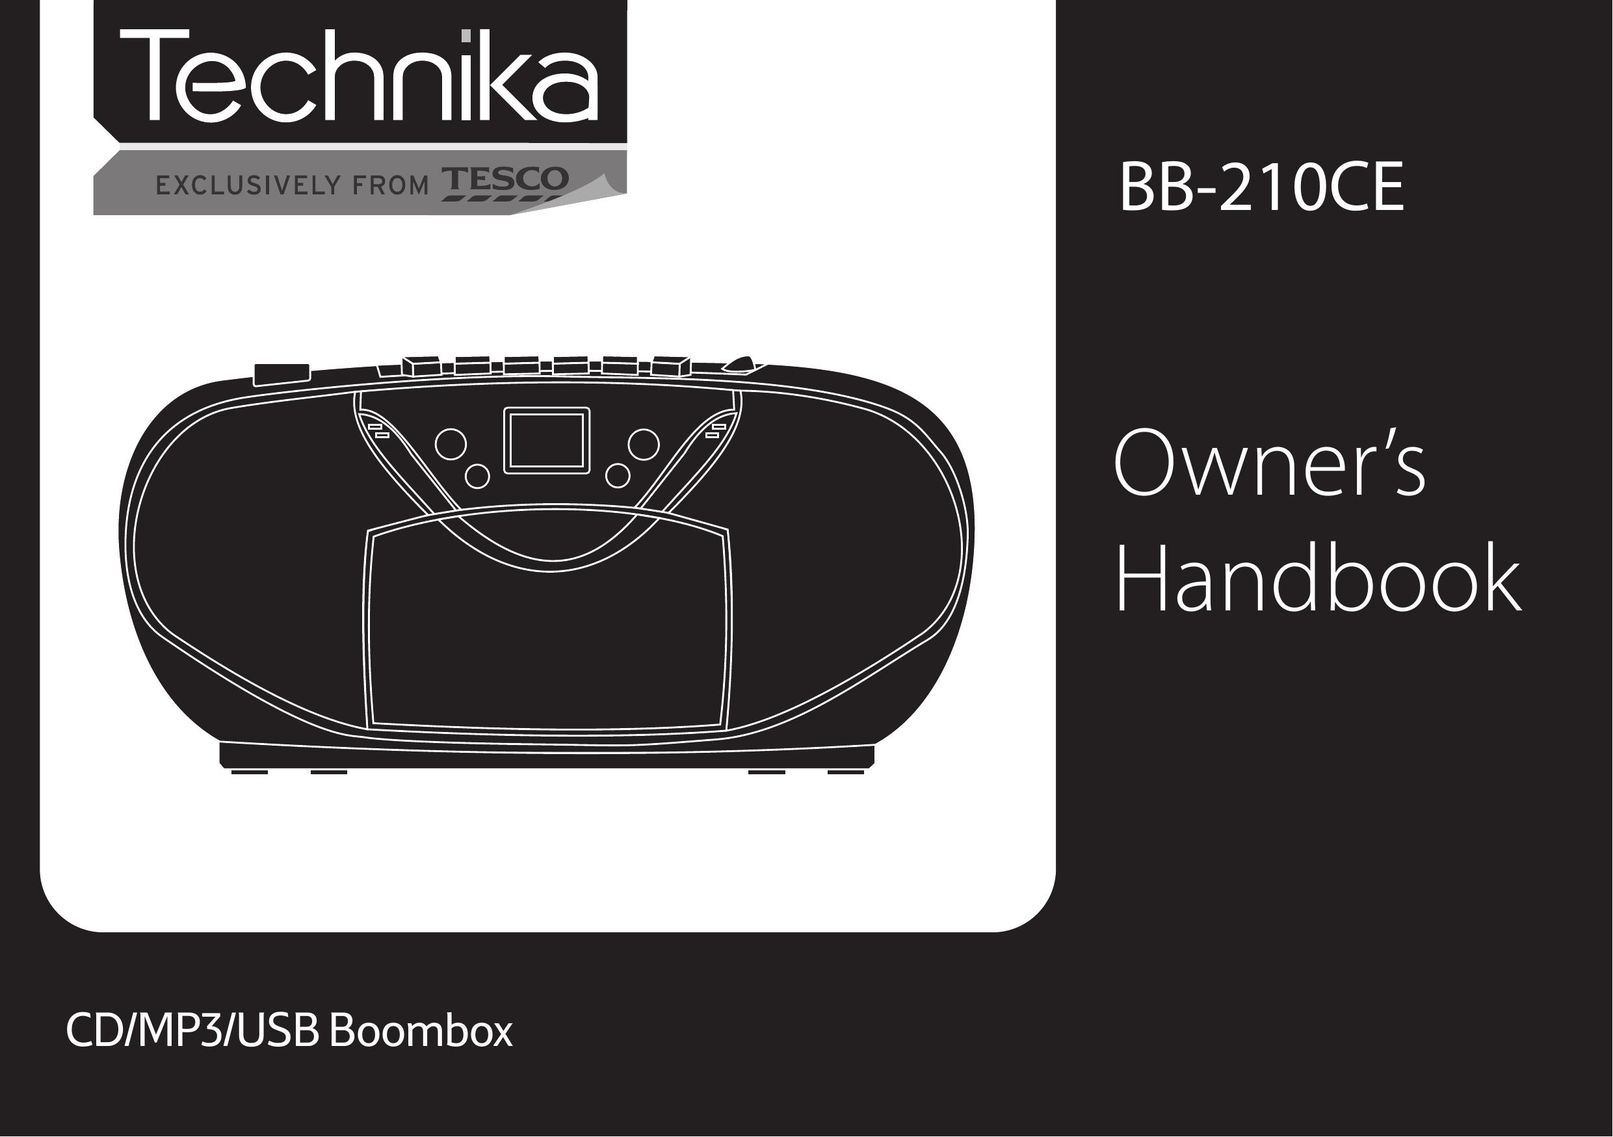 Technika BB-210CE Portable Stereo System User Manual